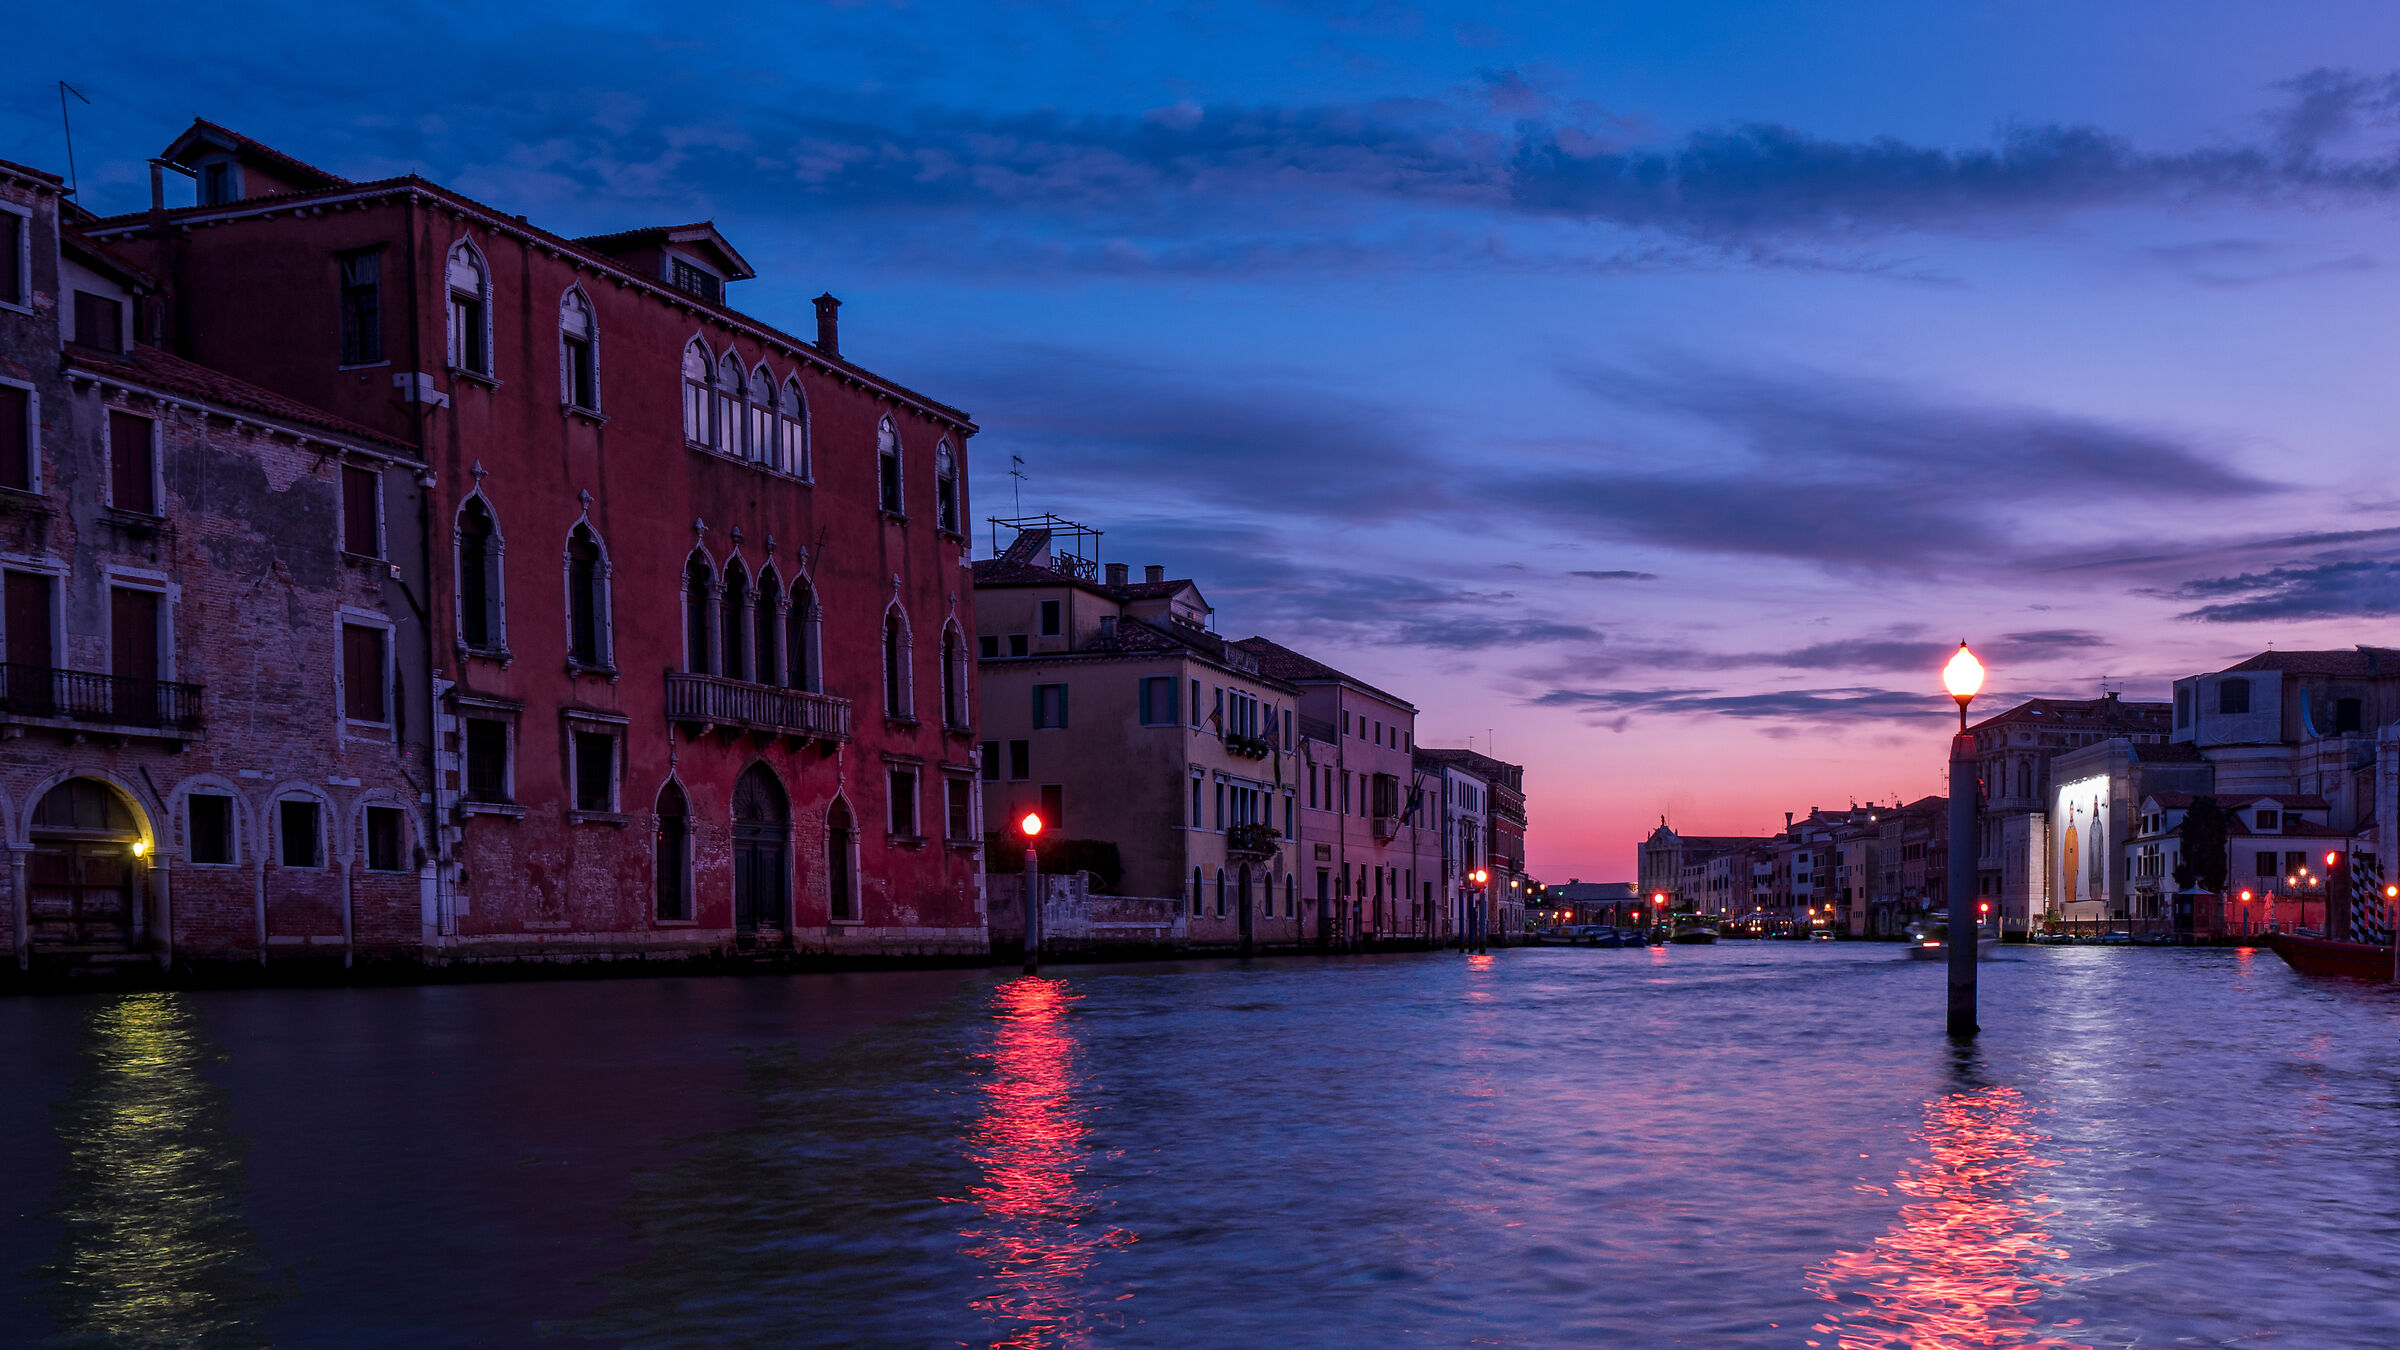 Venezia blue hour...